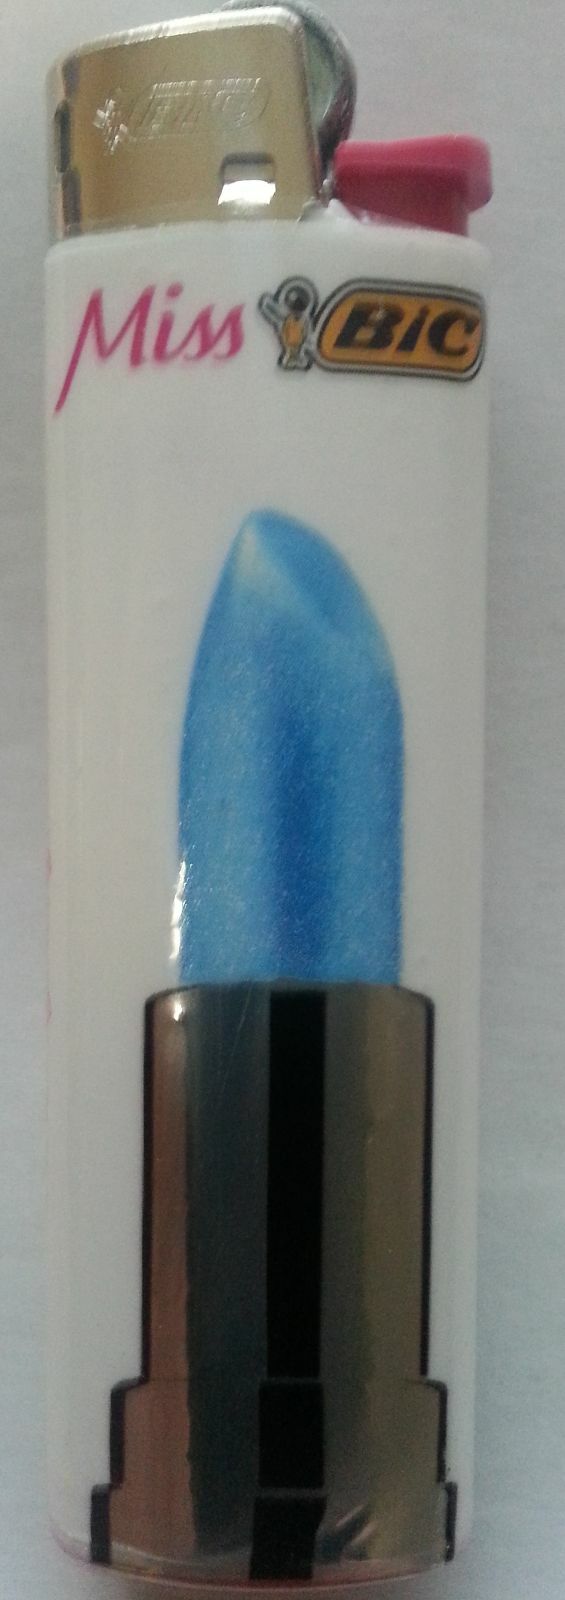 Bic lighter, miss bic slim maxi unique pattern lady lighter blue lipstick